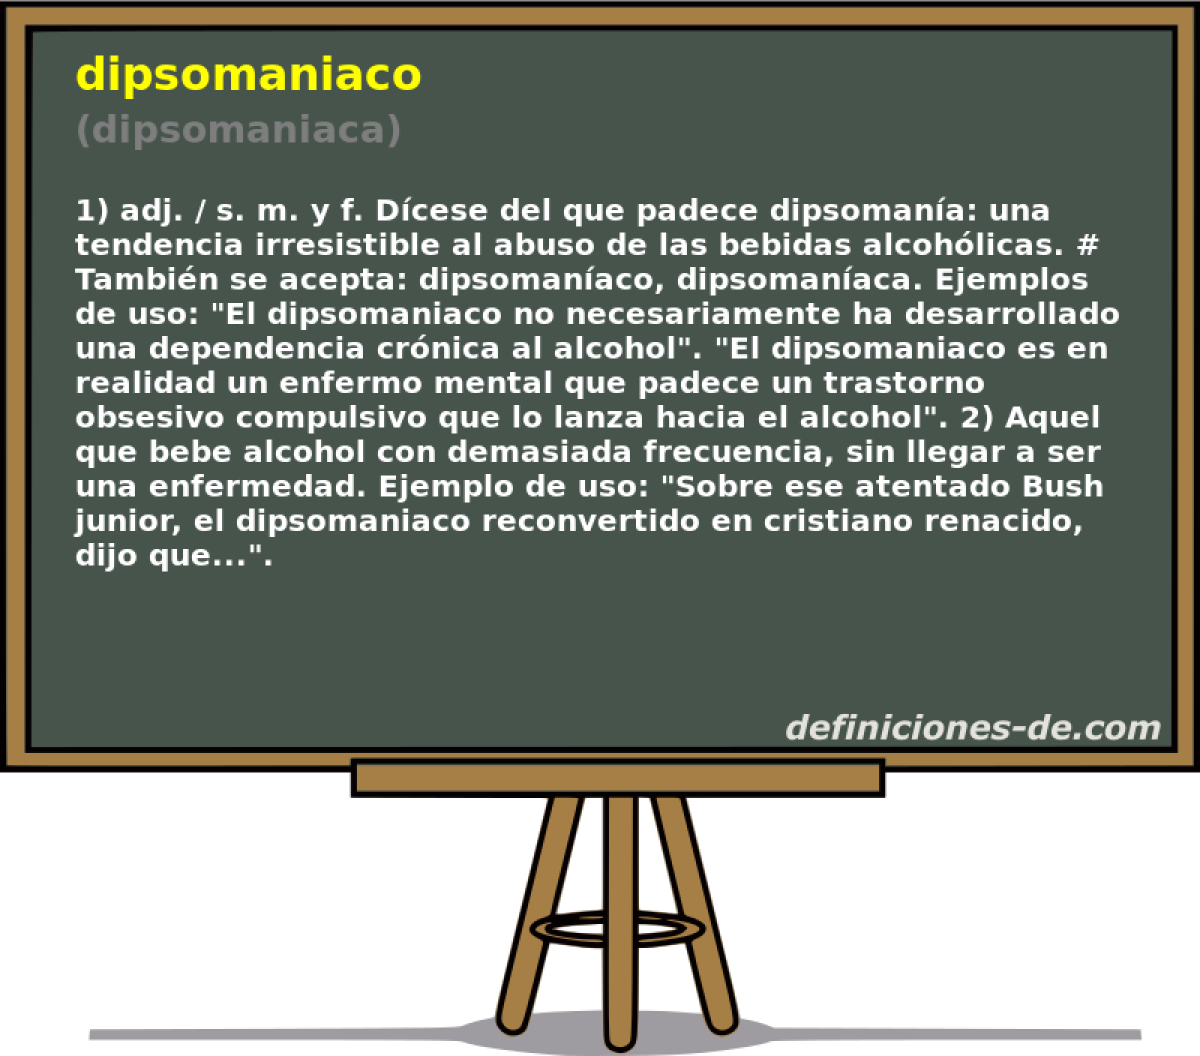 dipsomaniaco (dipsomaniaca)